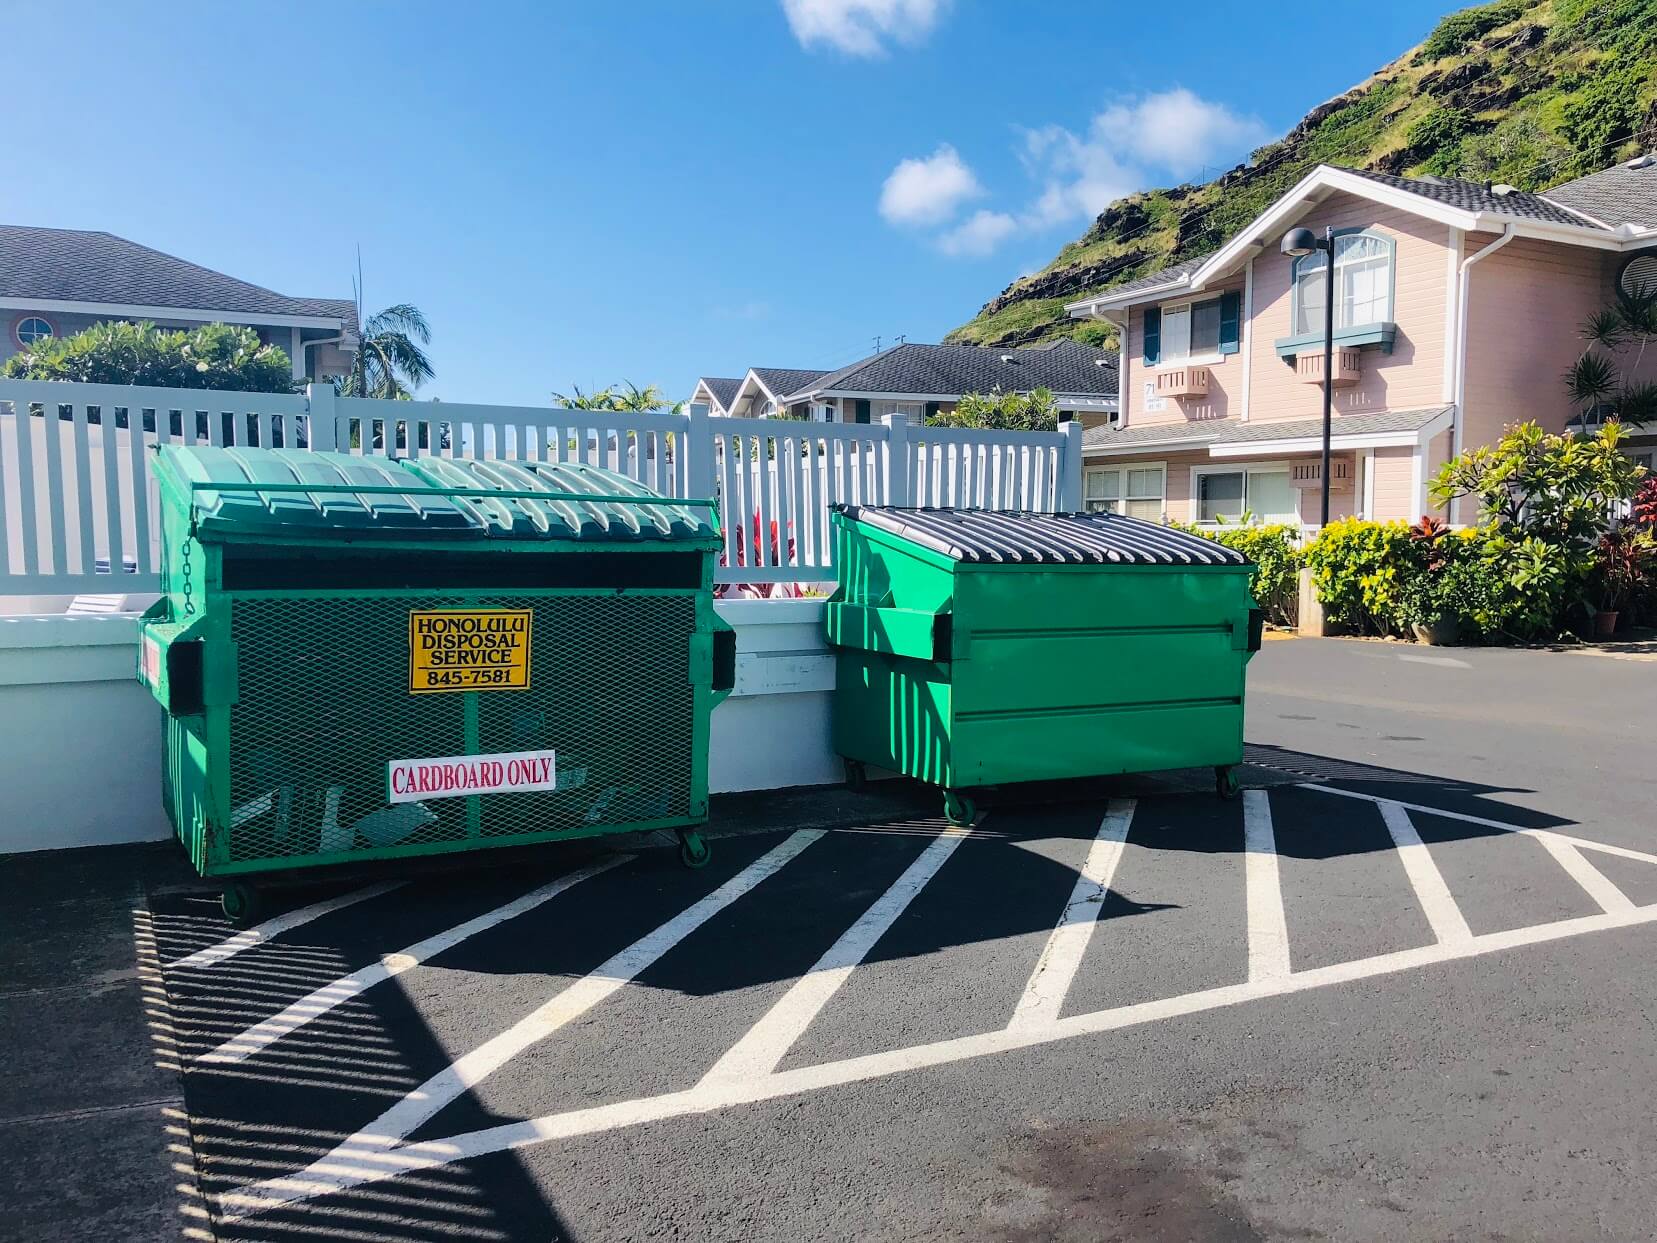 Lalea at Hawaii Kaiのゴミ箱